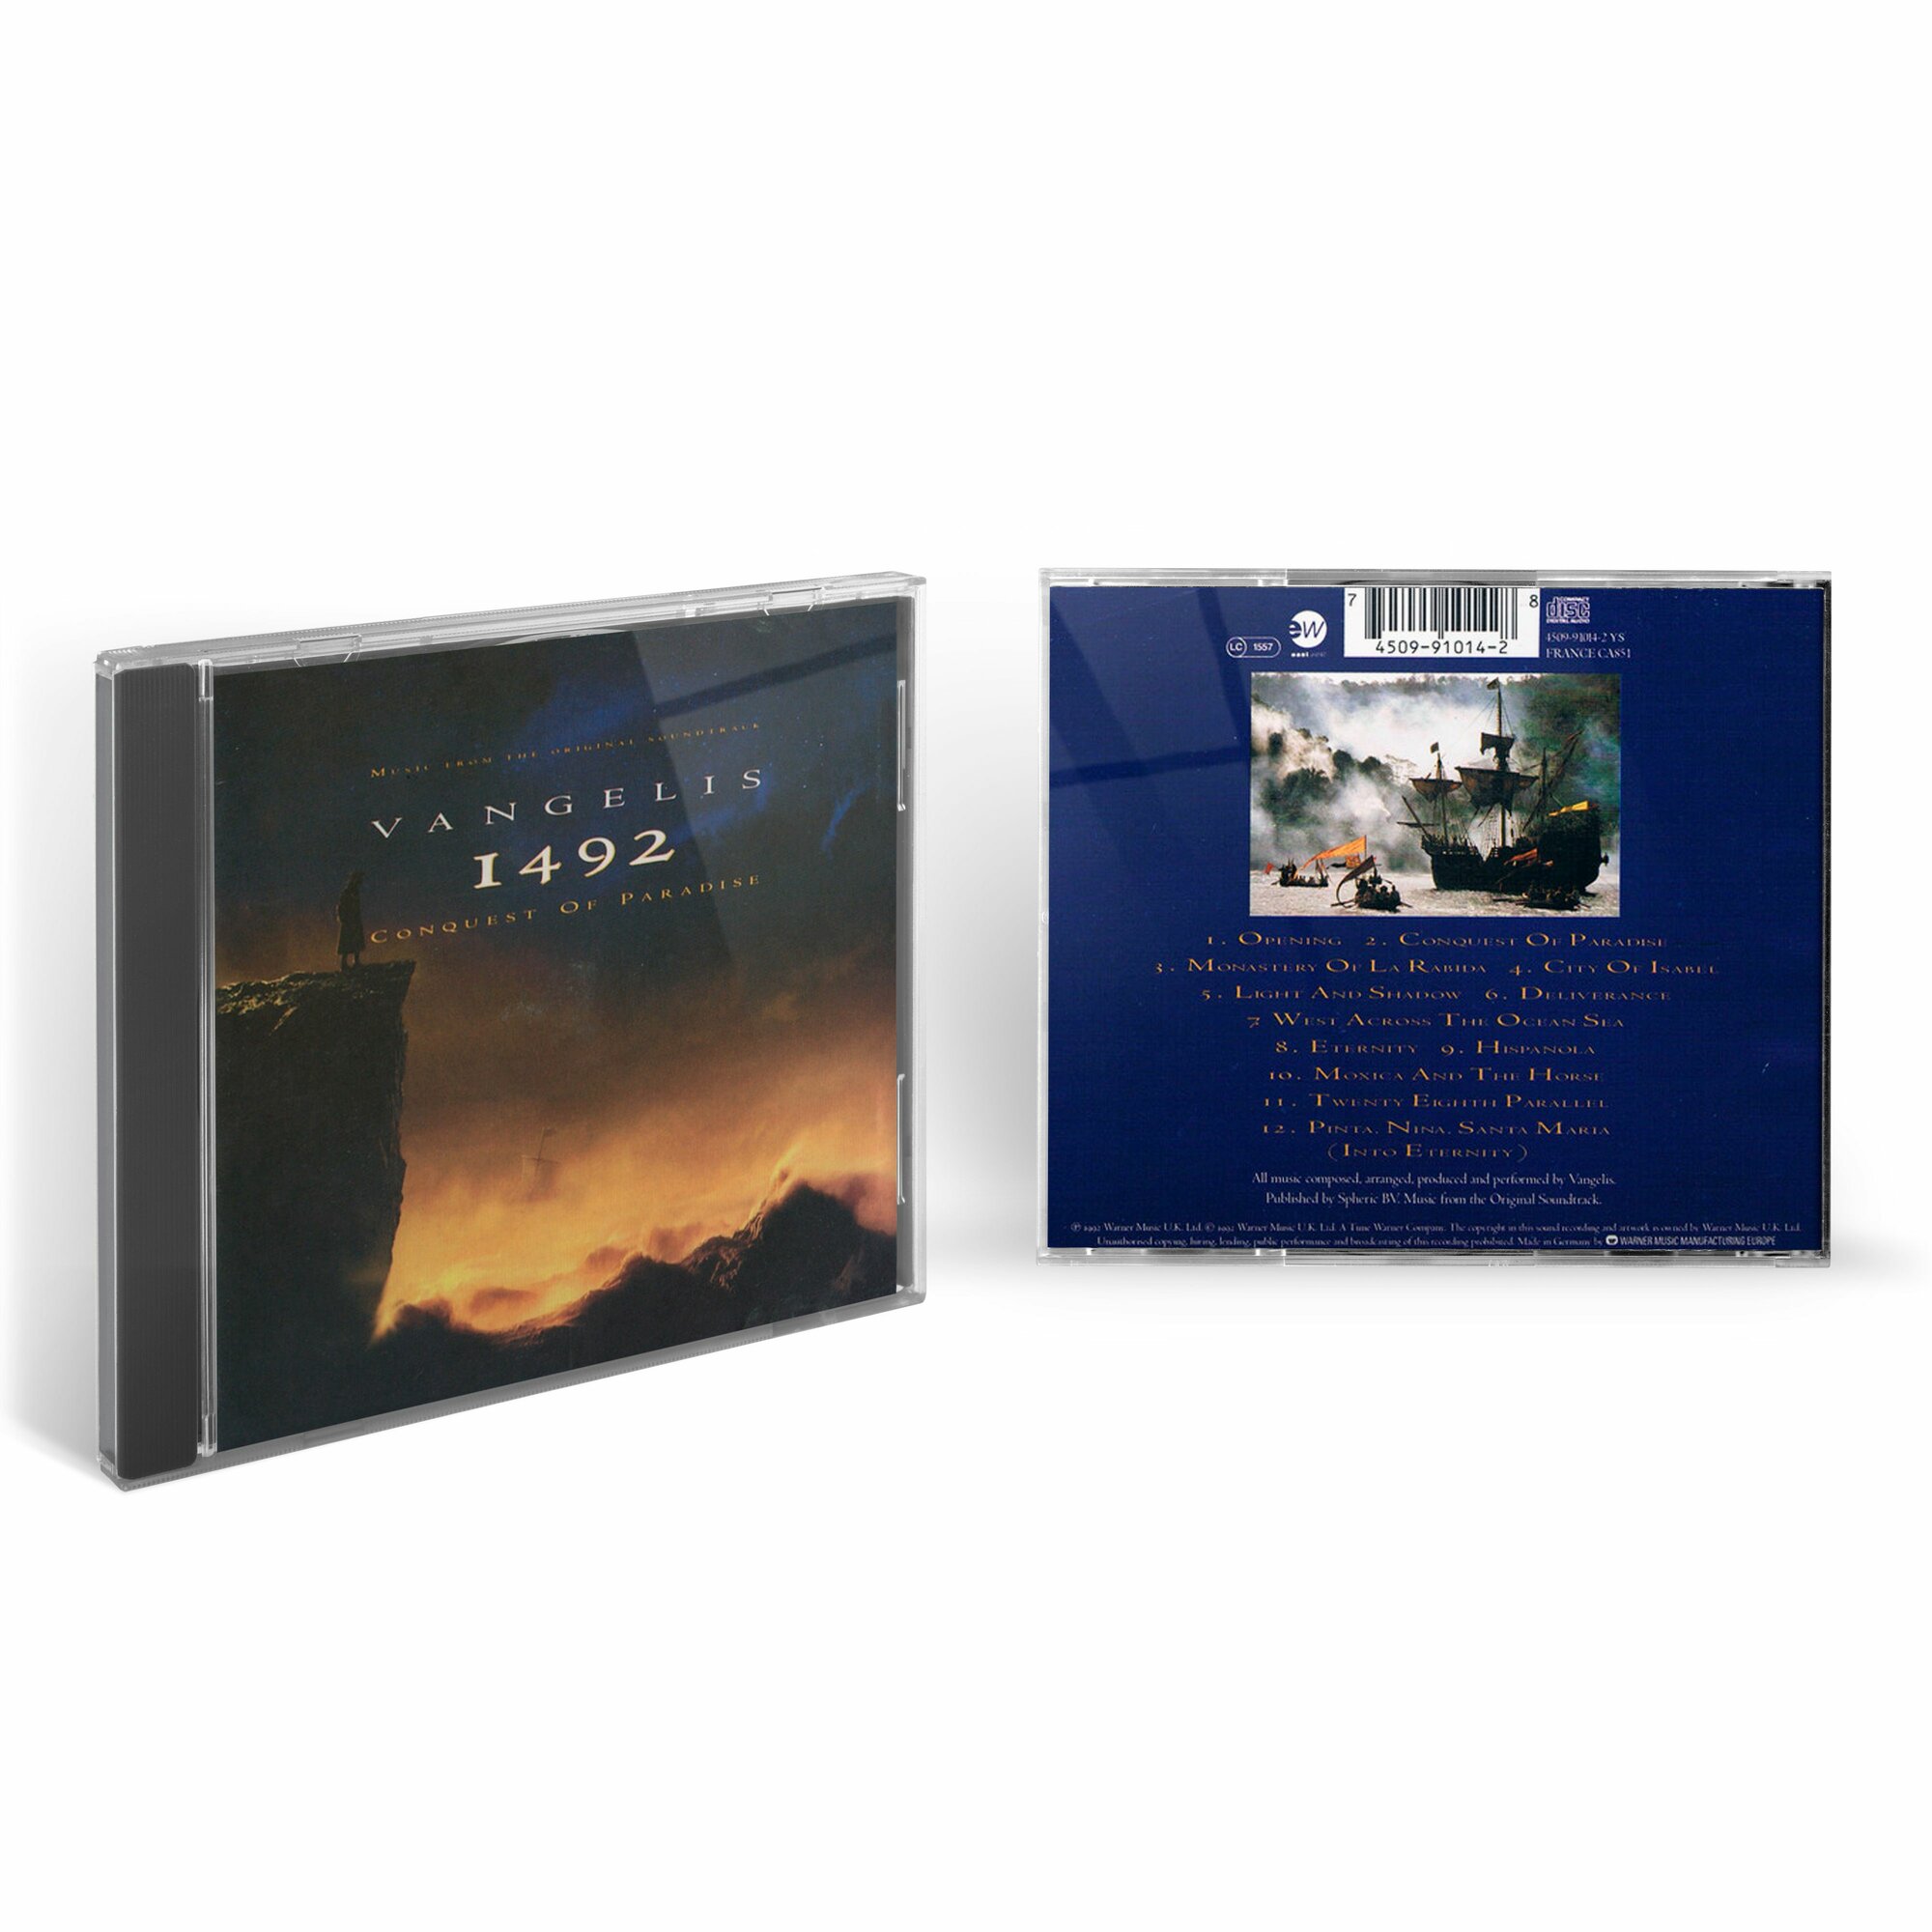 Vangelis - 1492: Conquest Of Paradise (OST) (1CD) 1992 EastWest Jewel Аудио диск